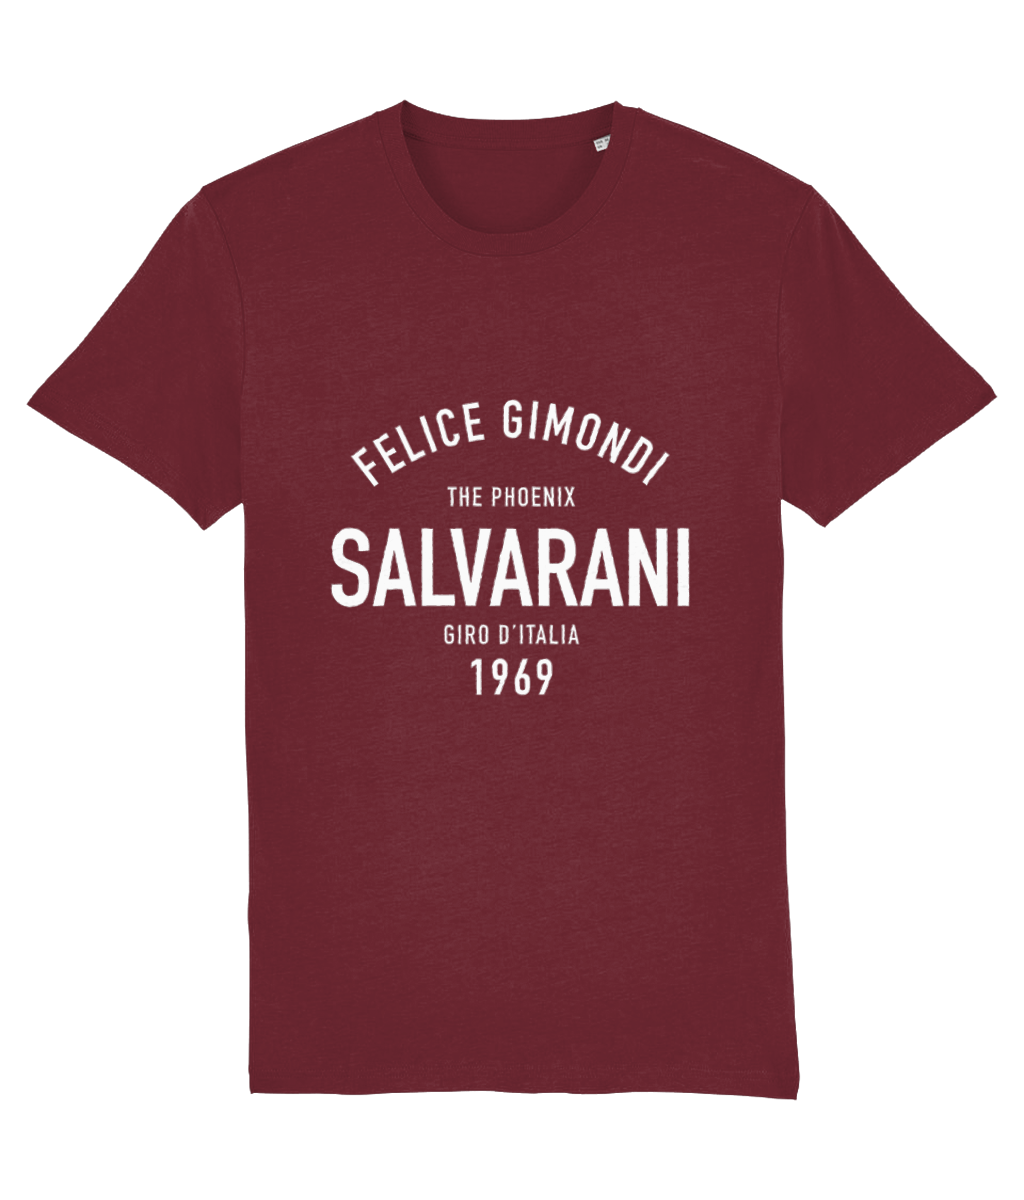 Felice Gimondi Salvarani, Giro d'Italia 1969 - T-Shirt